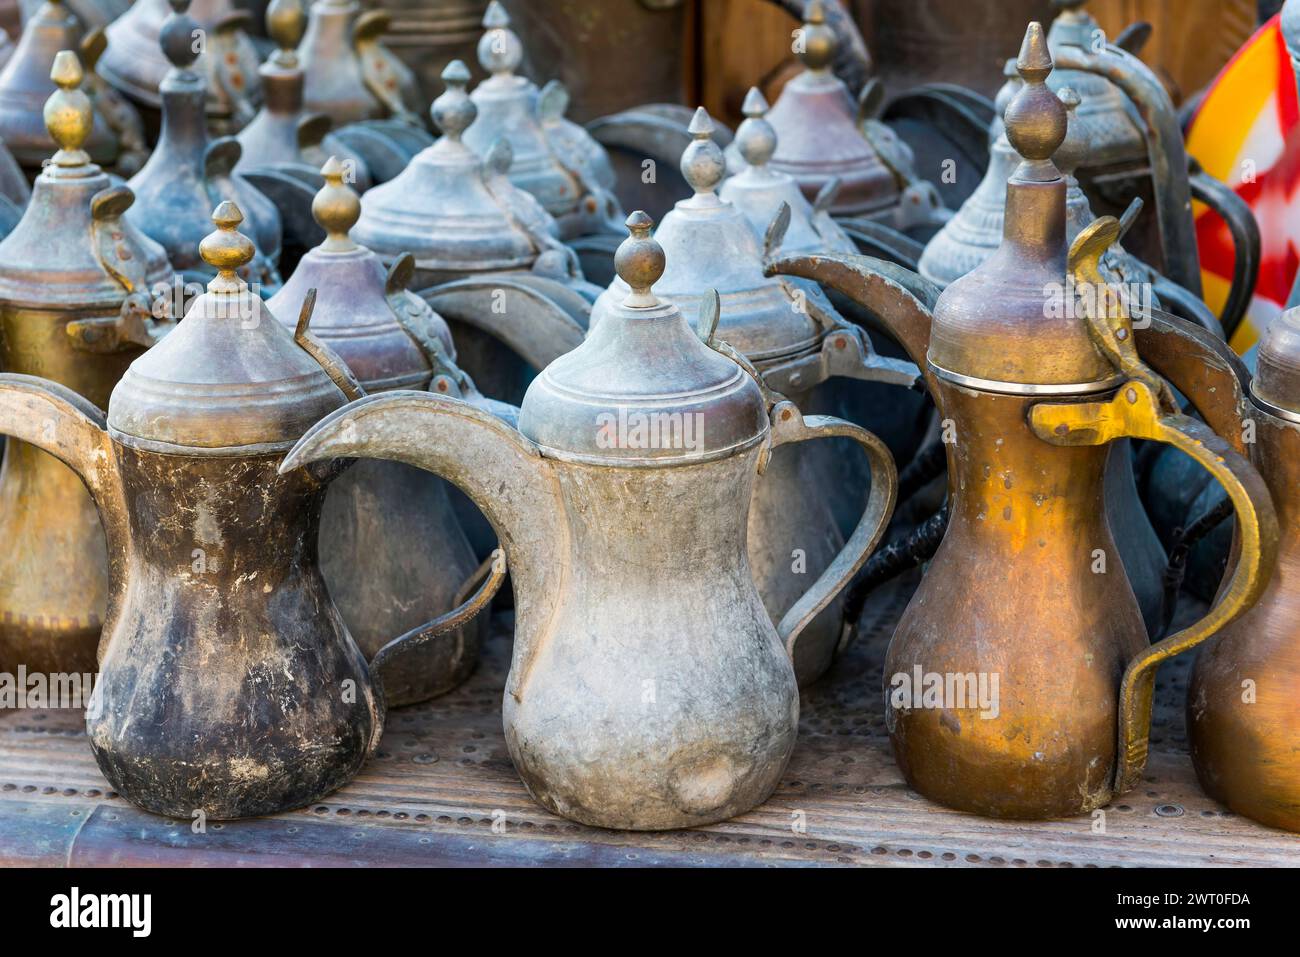 Traditional coffee pots, pot, coffee, mocha, Muslim, Islam, Arabic, old, Orient, oriental, travel, culture, cultural history, drink, flea market Stock Photo